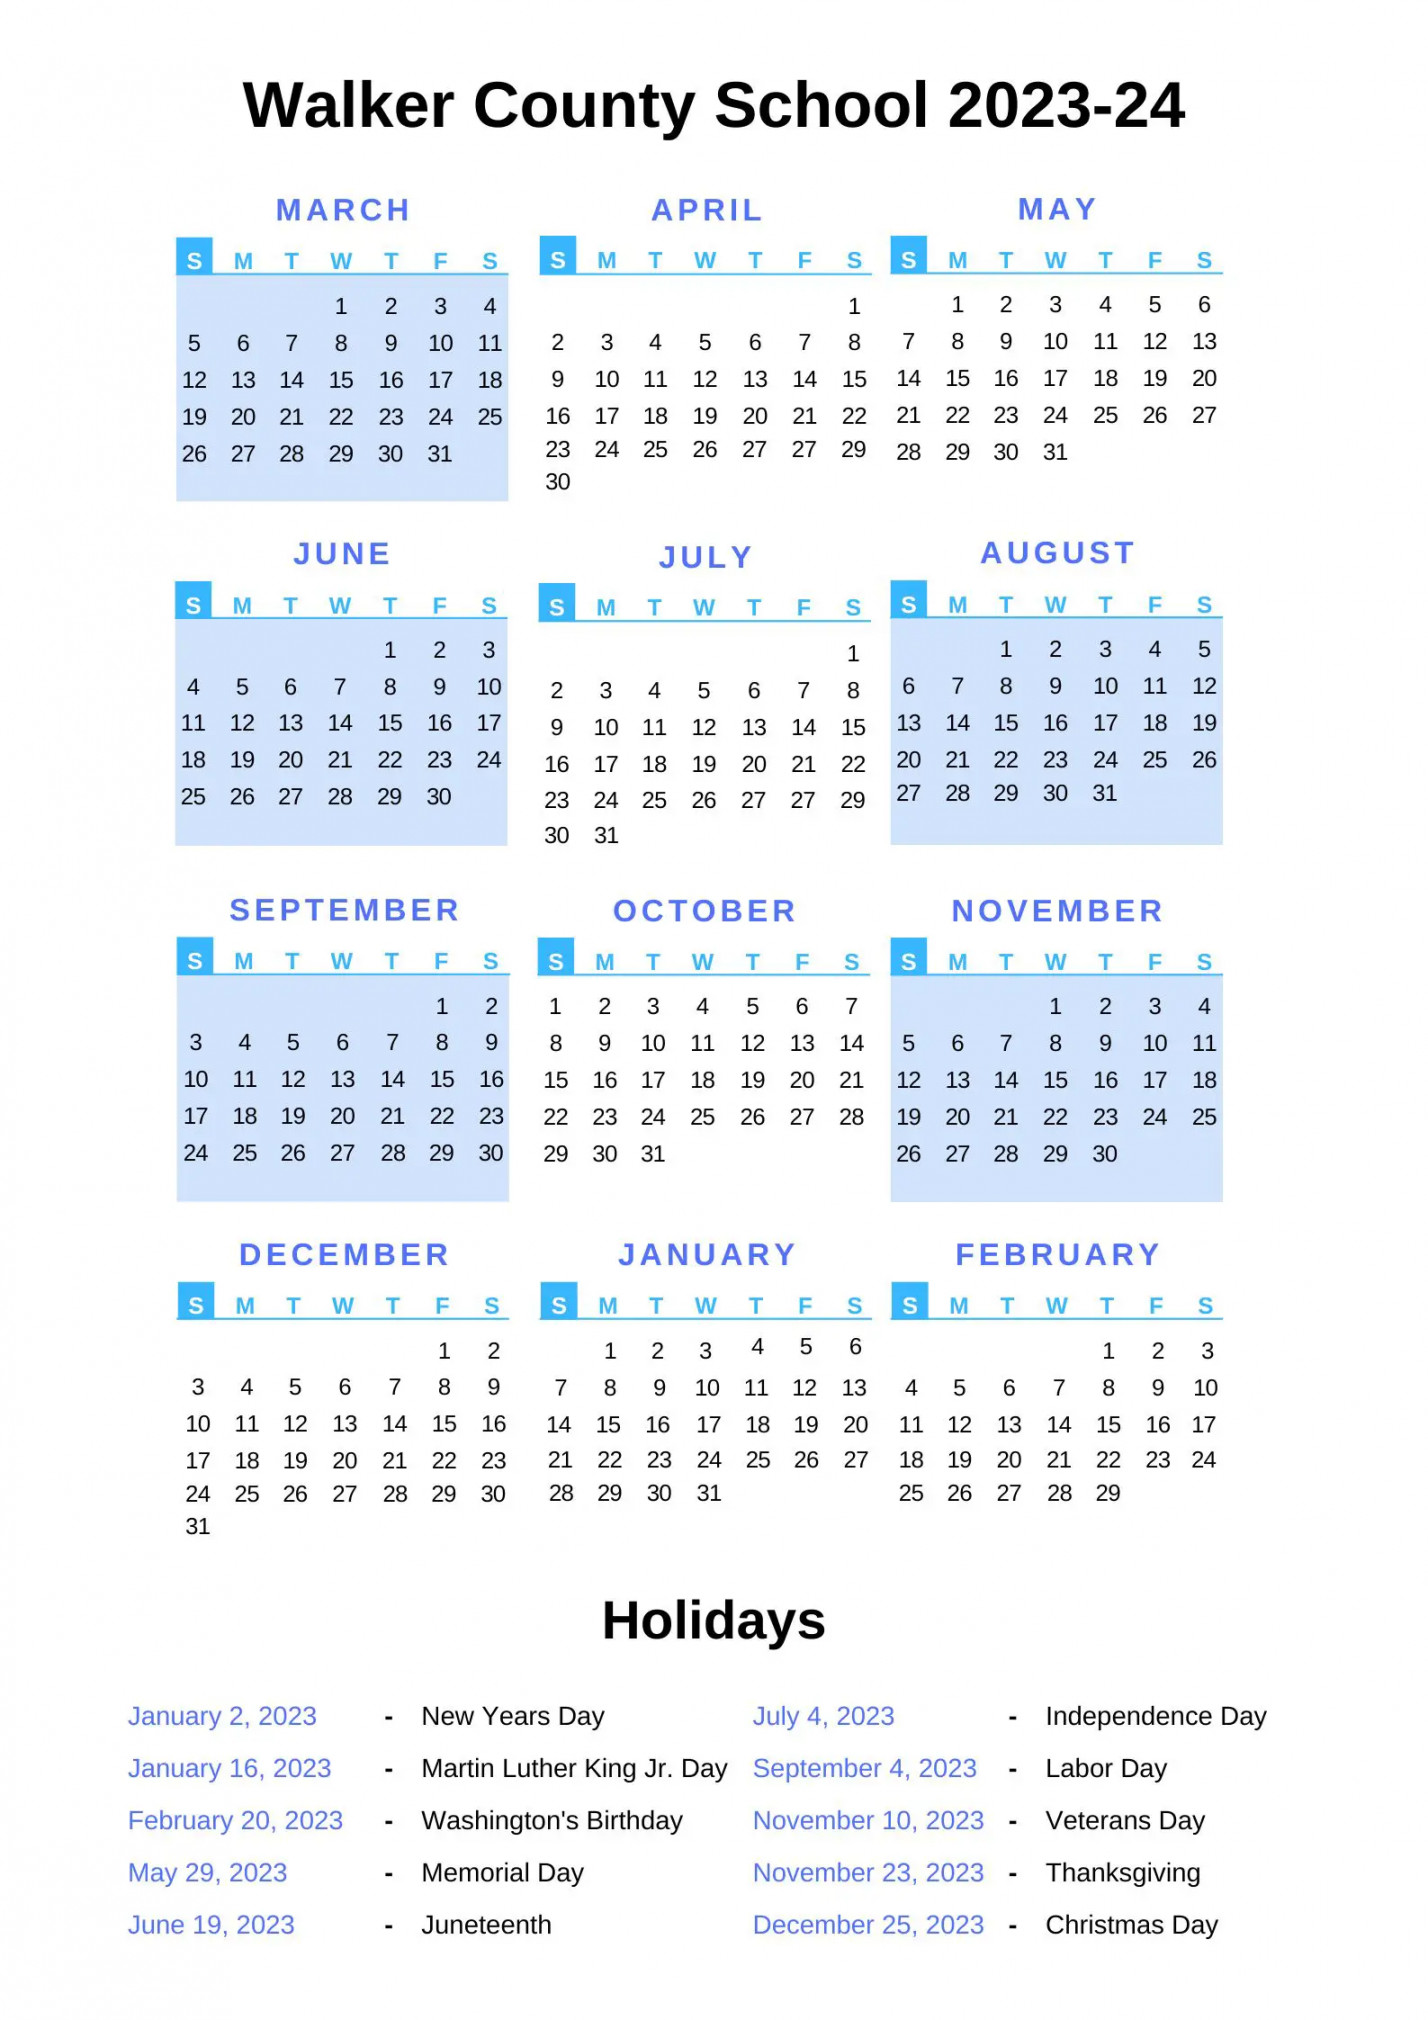 Walker County Schools Calendar - with Holidays